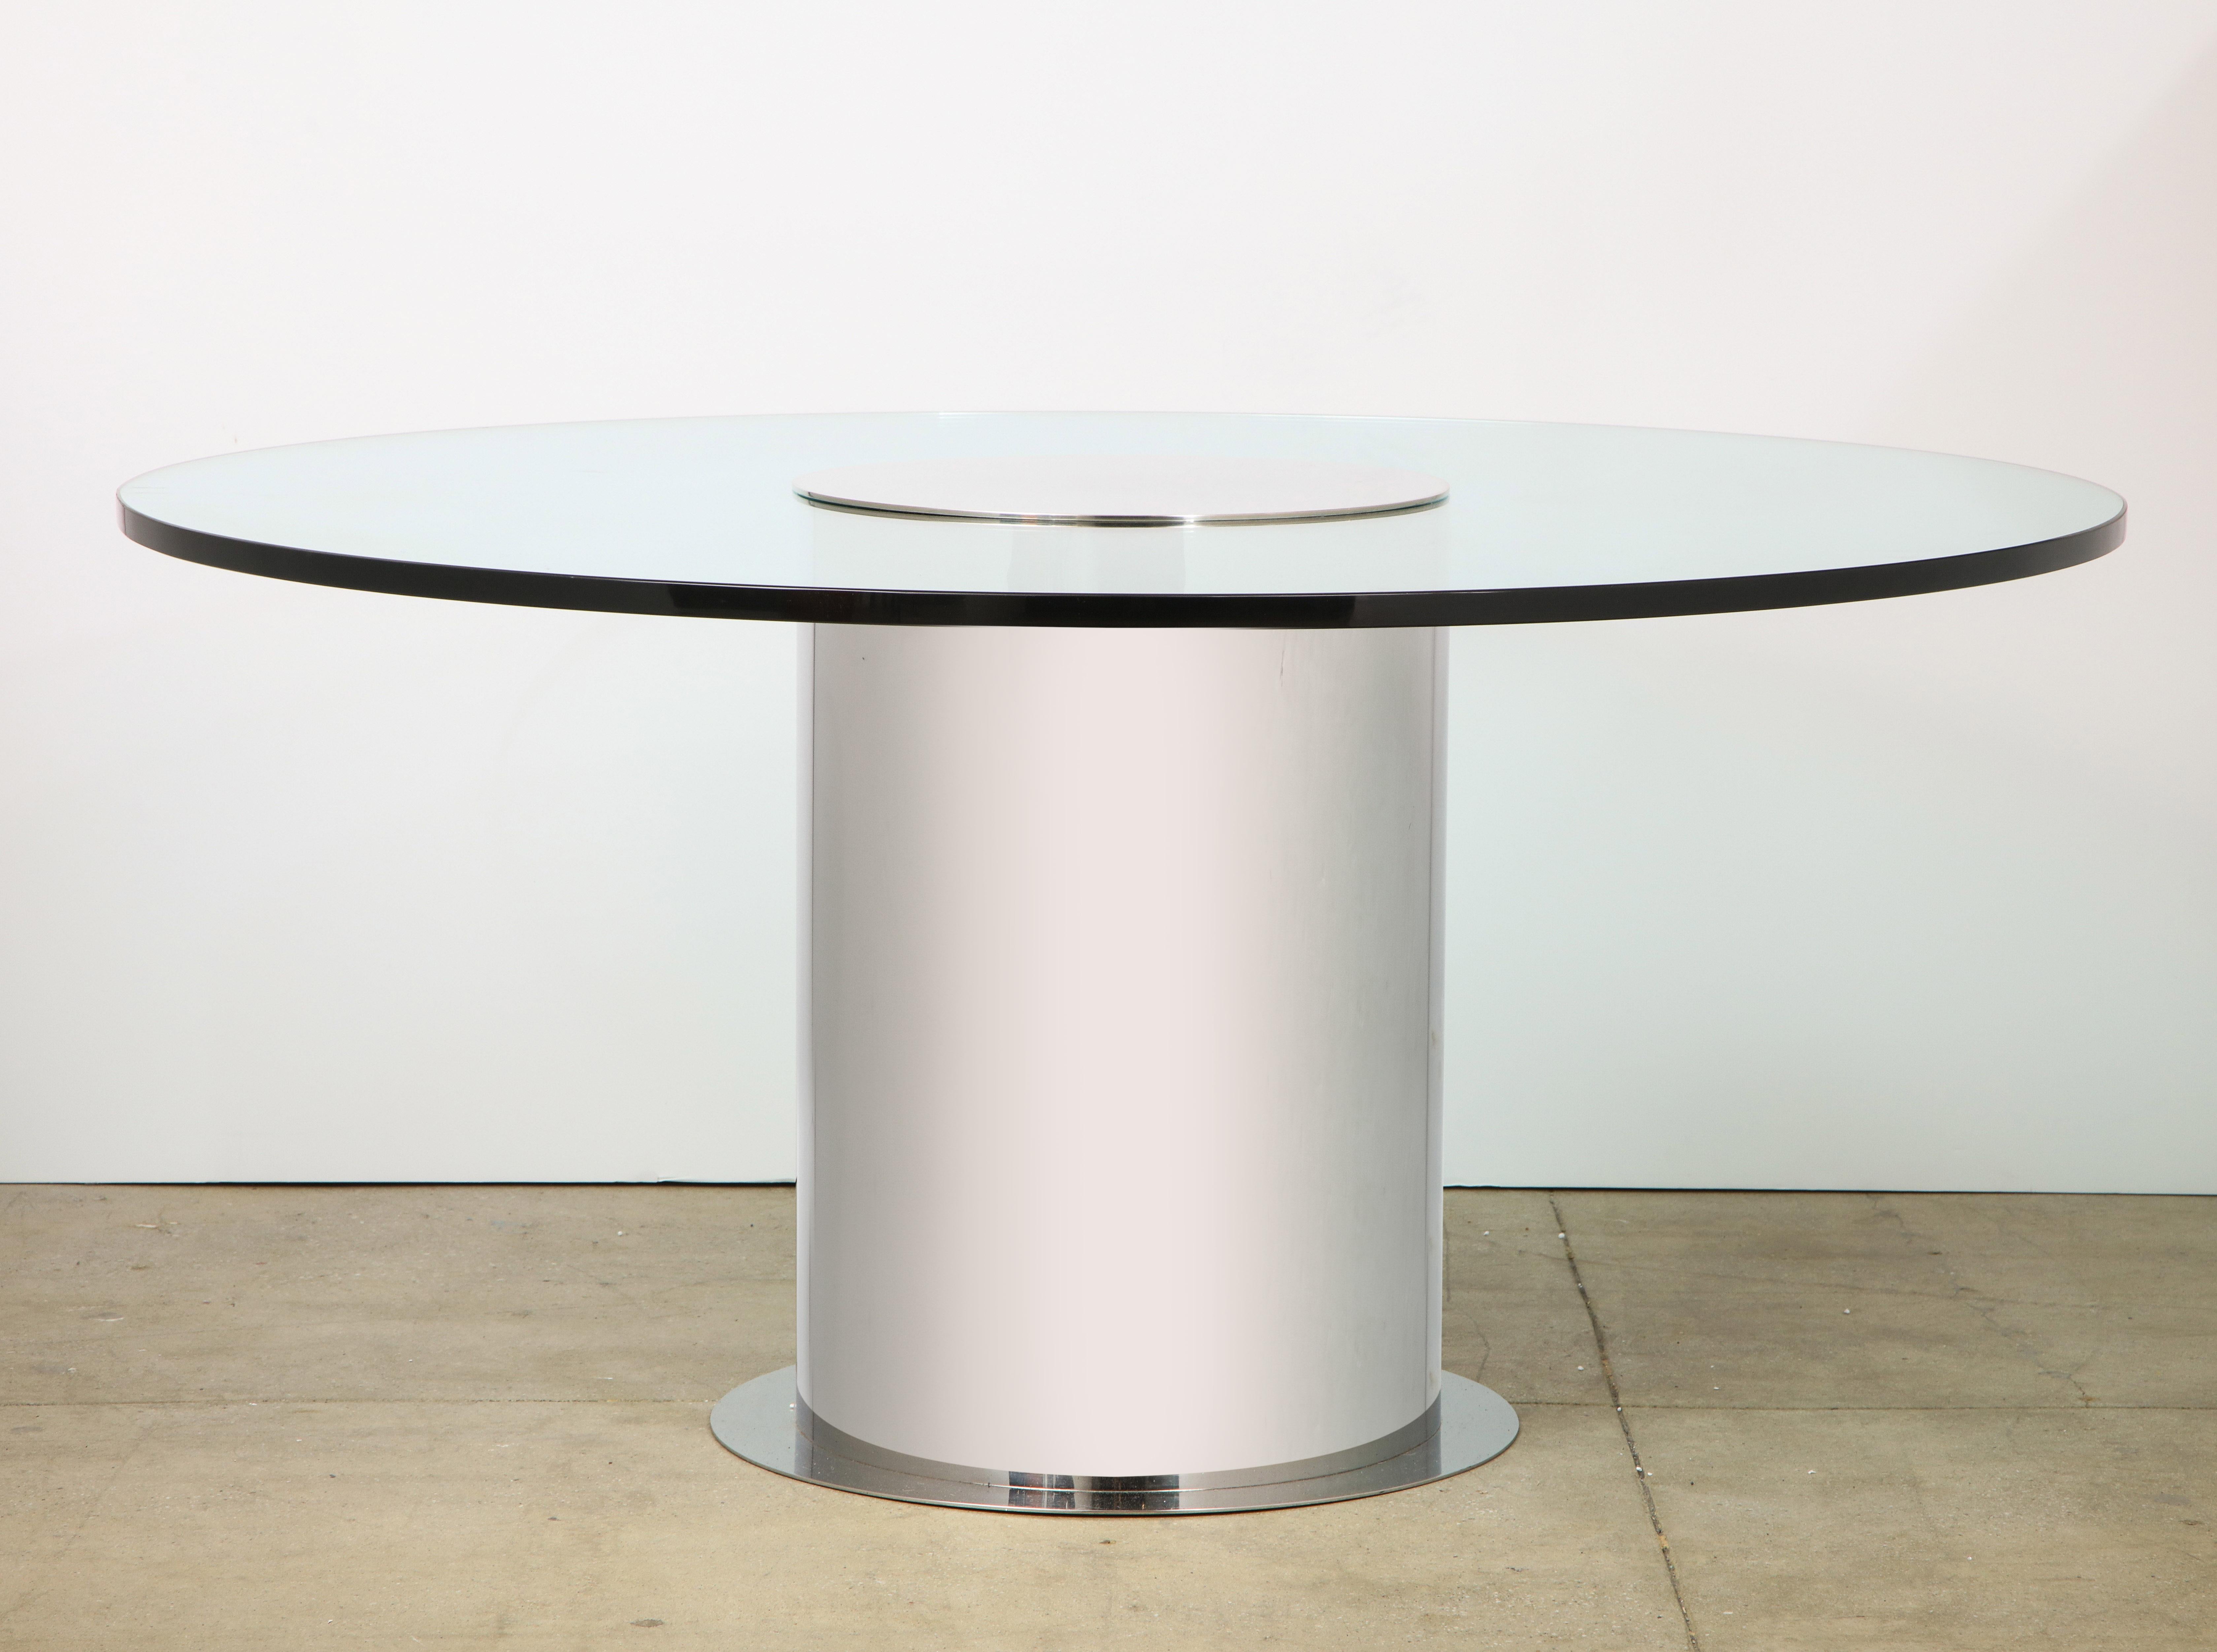 Rare large 1970s Paul Mayen dining table for habitat.
The polished aluminum column base supports a 60